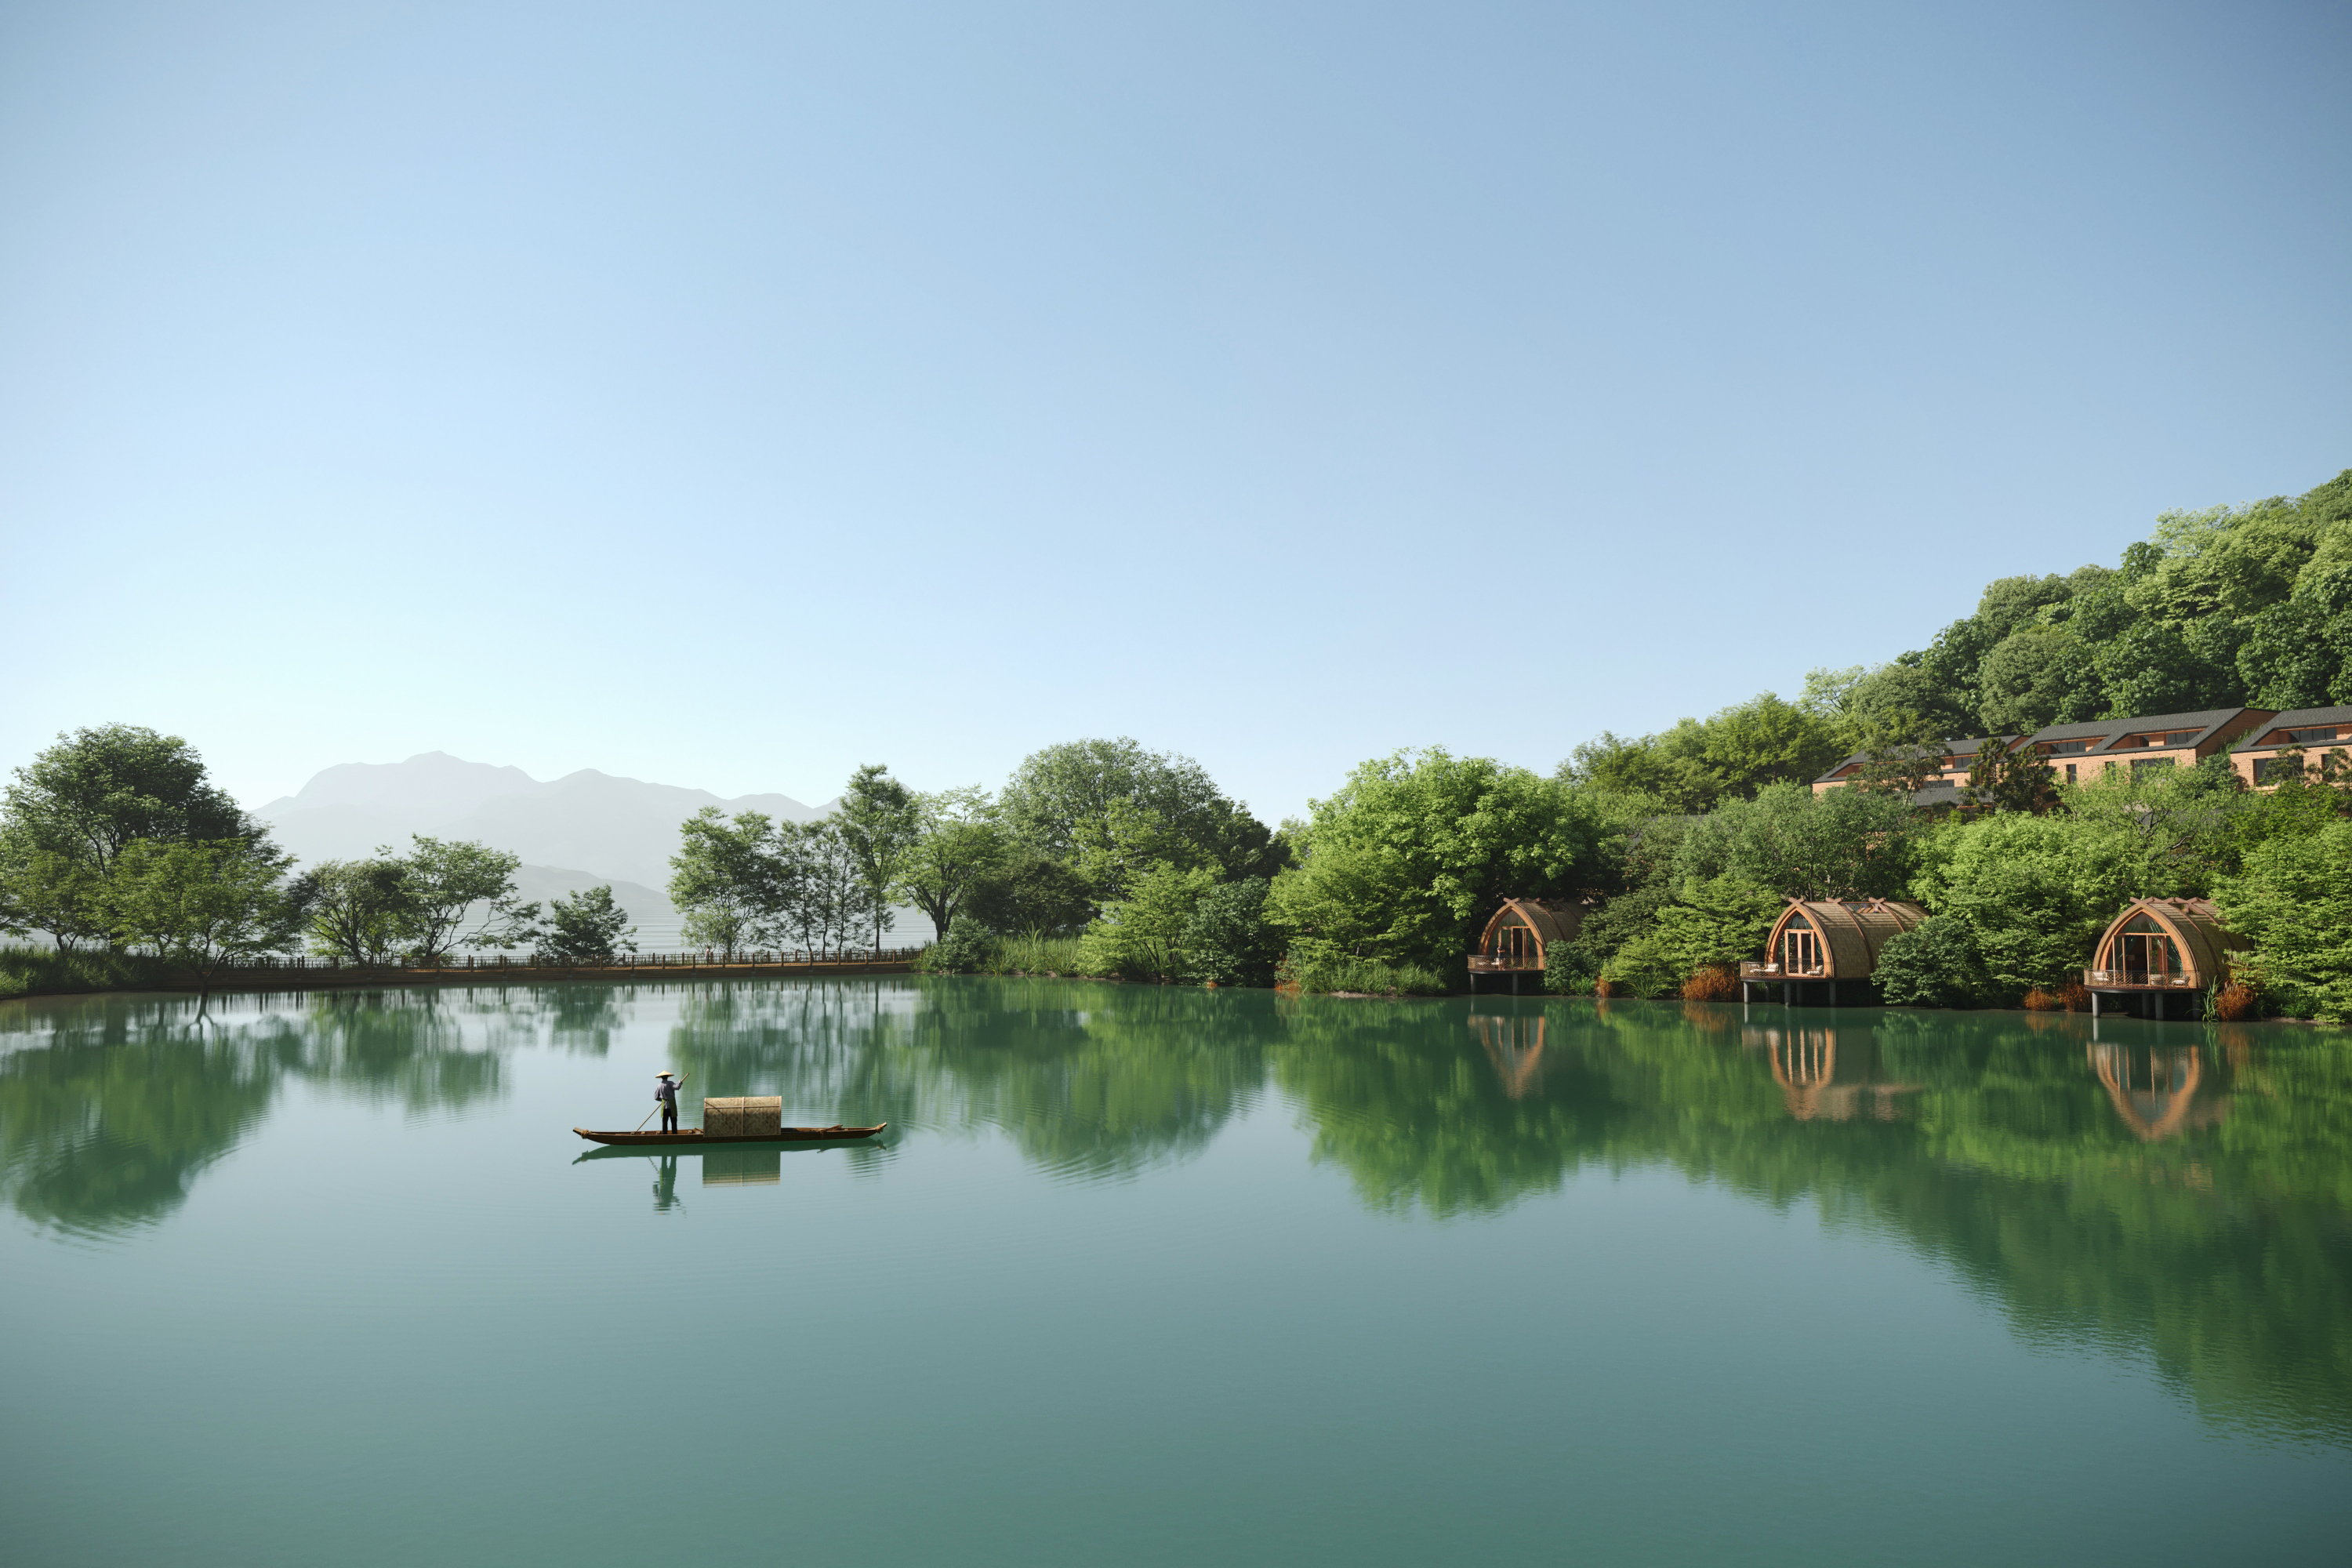 Boat Rooms on the Fuchun River